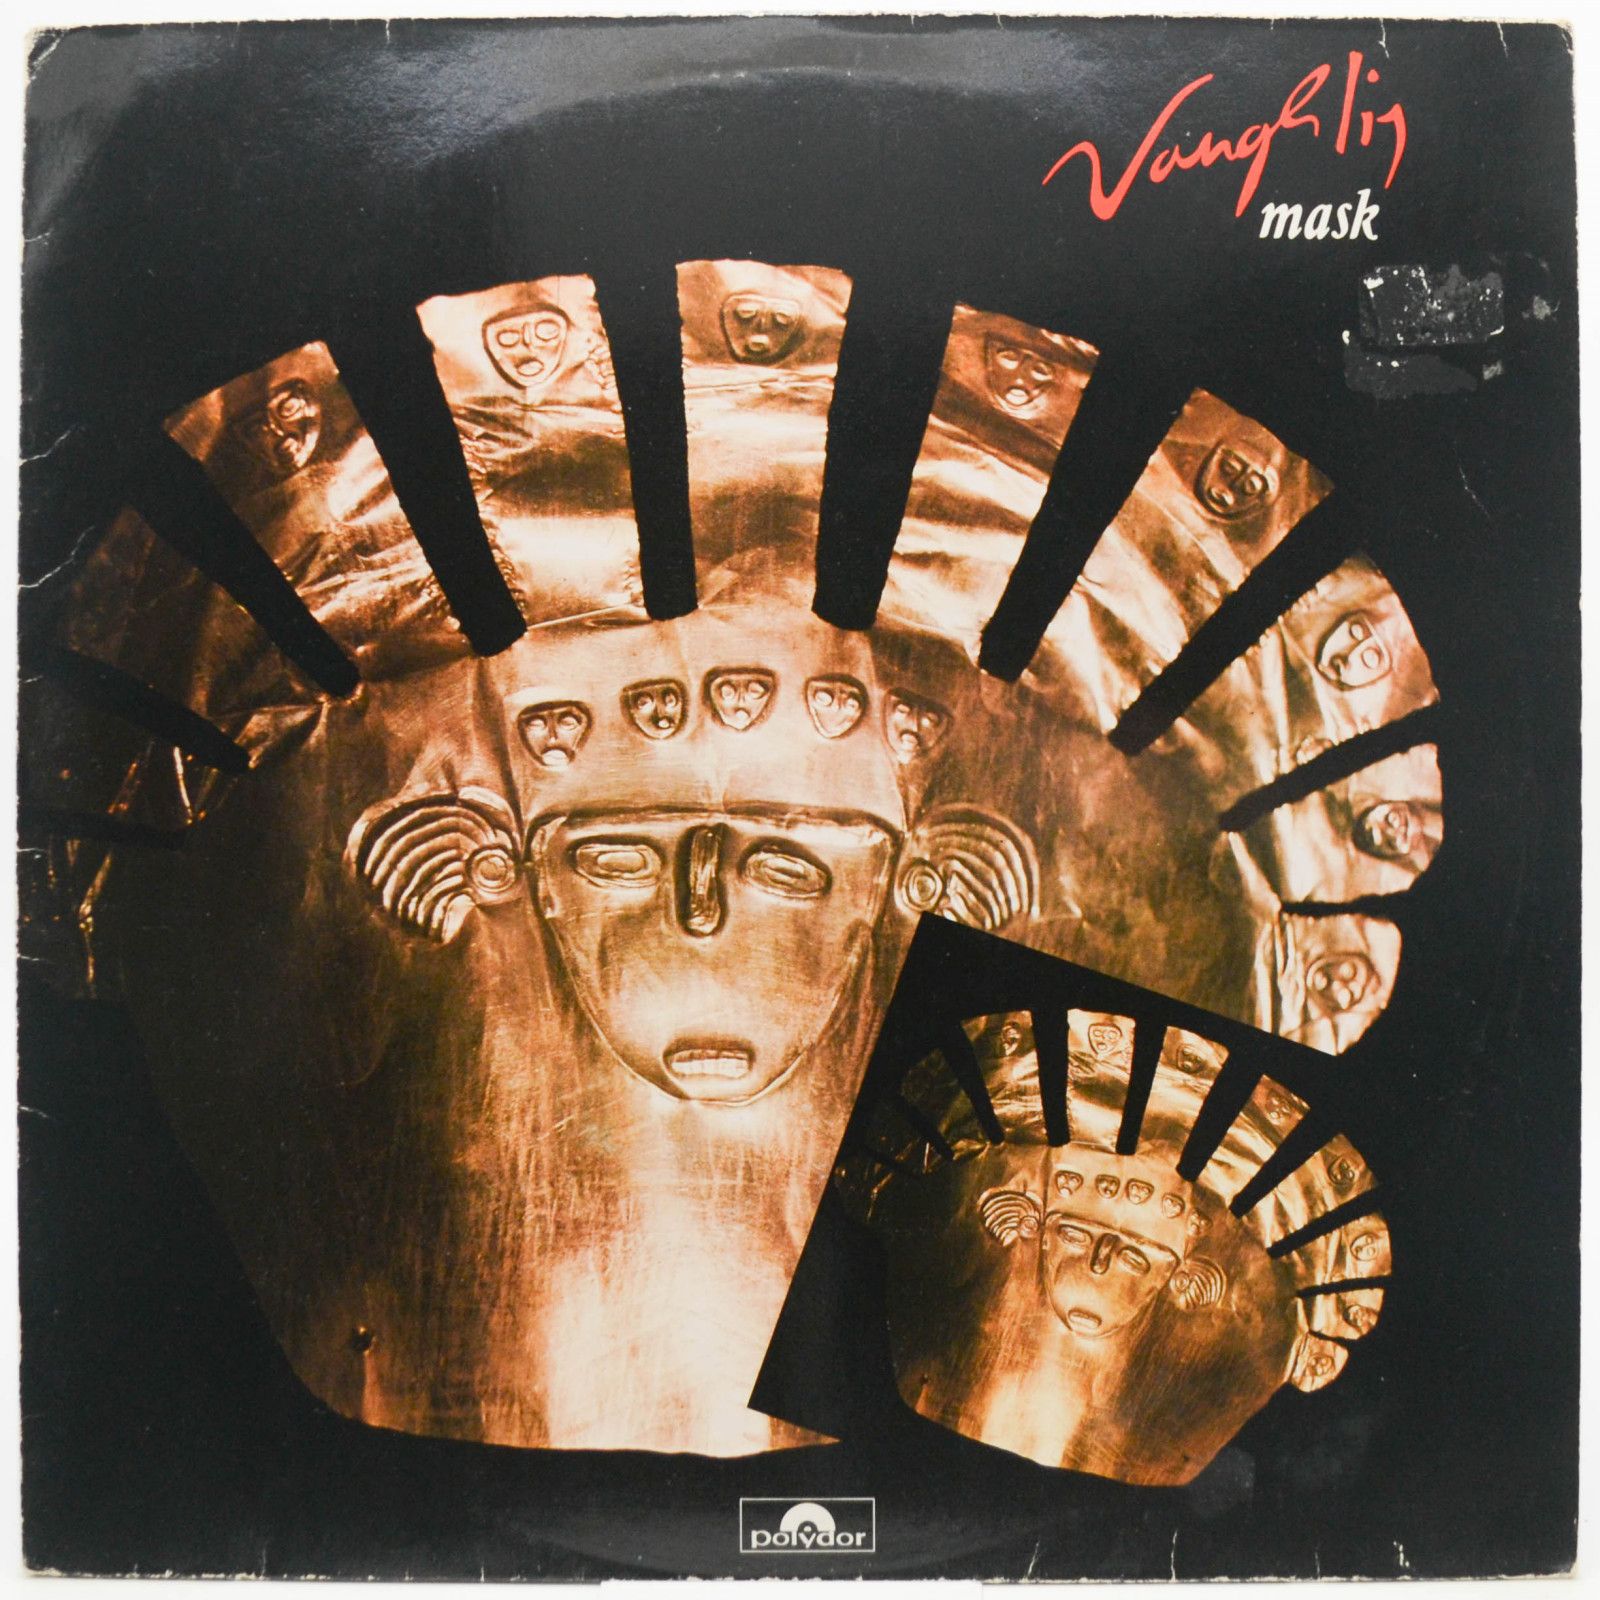 Vangelis — Mask, 1985